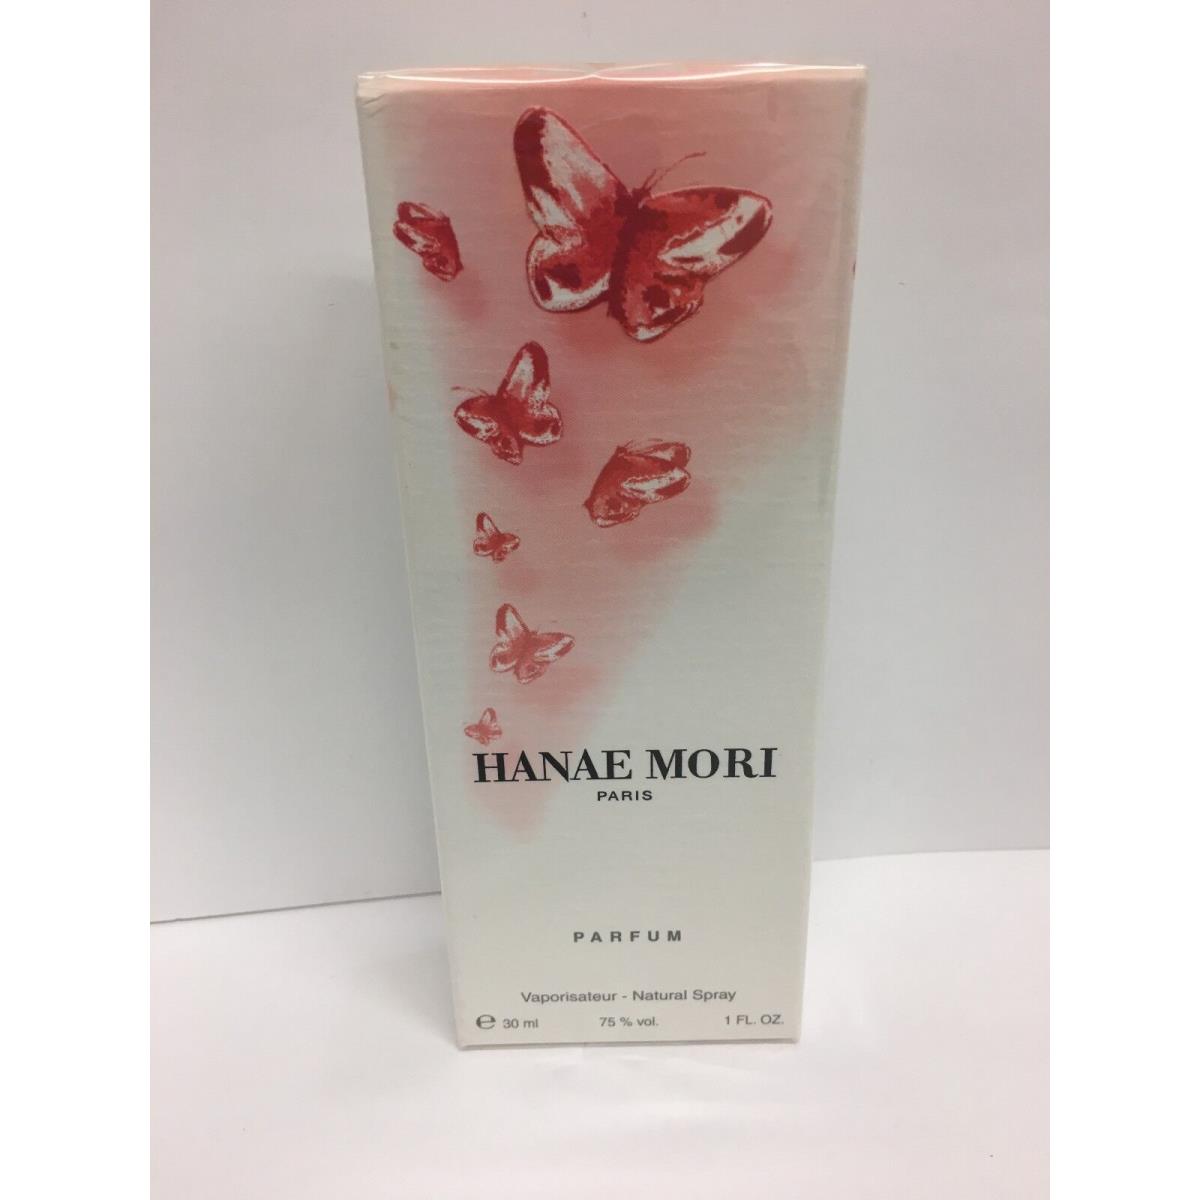 Hanae Mori Paris Classic Women Pure Parfum Spray 1.0 oz / 30 ml